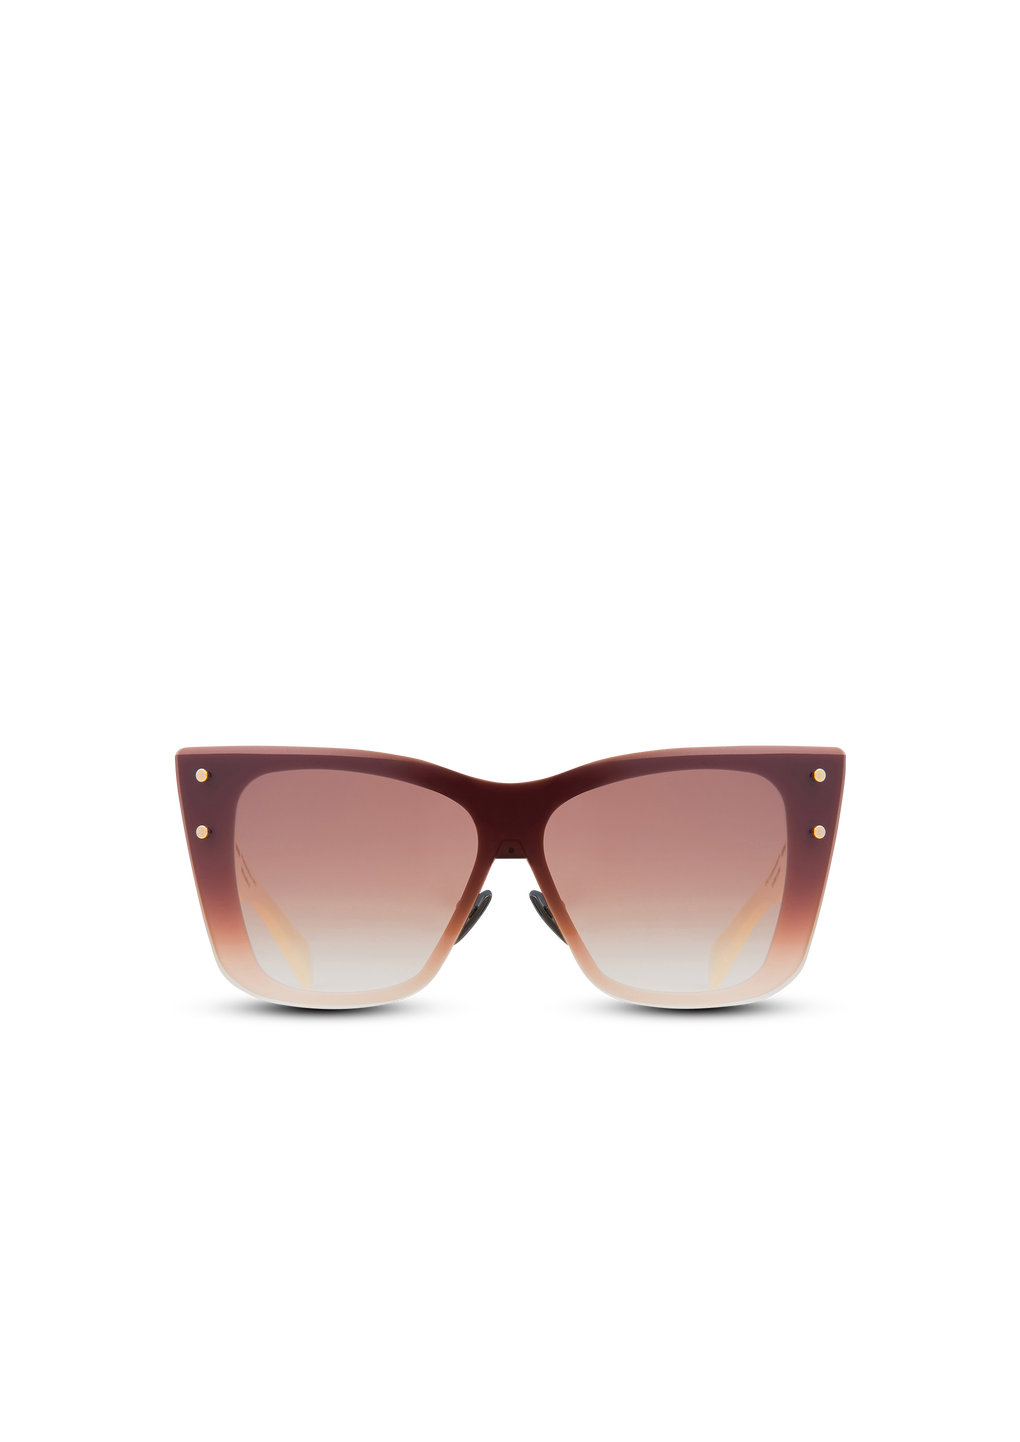 Tortoiseshell-effect titanium Armour sunglasses, white, hi-res